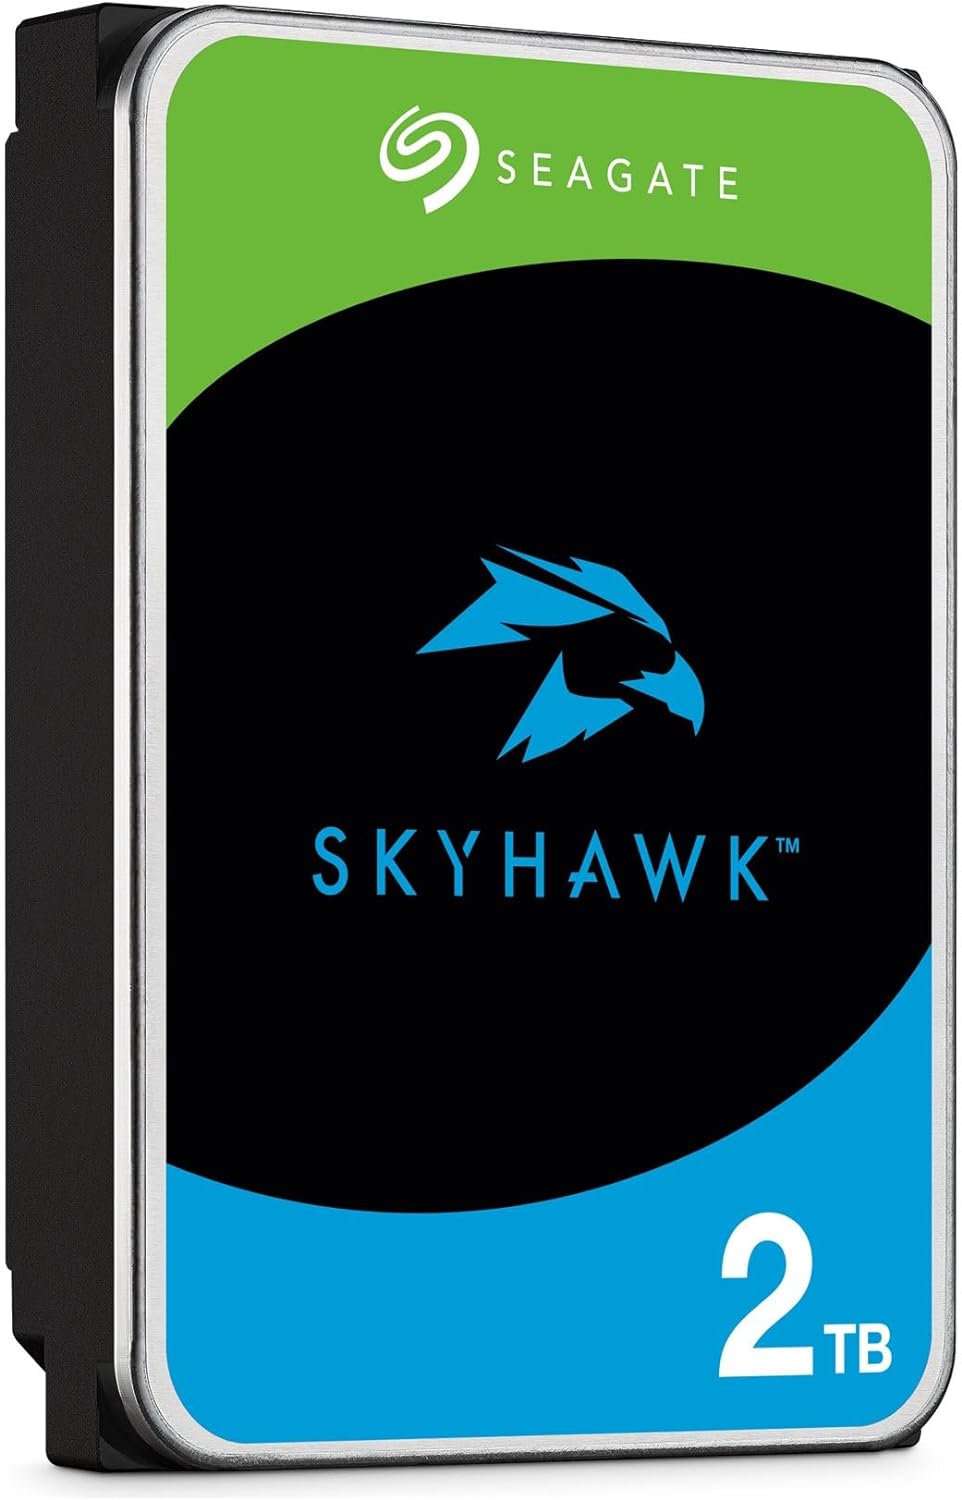 Seagate 3.5" SATA SkyHawk 2TB  256MB  Internal Hard Drive (Brand New)